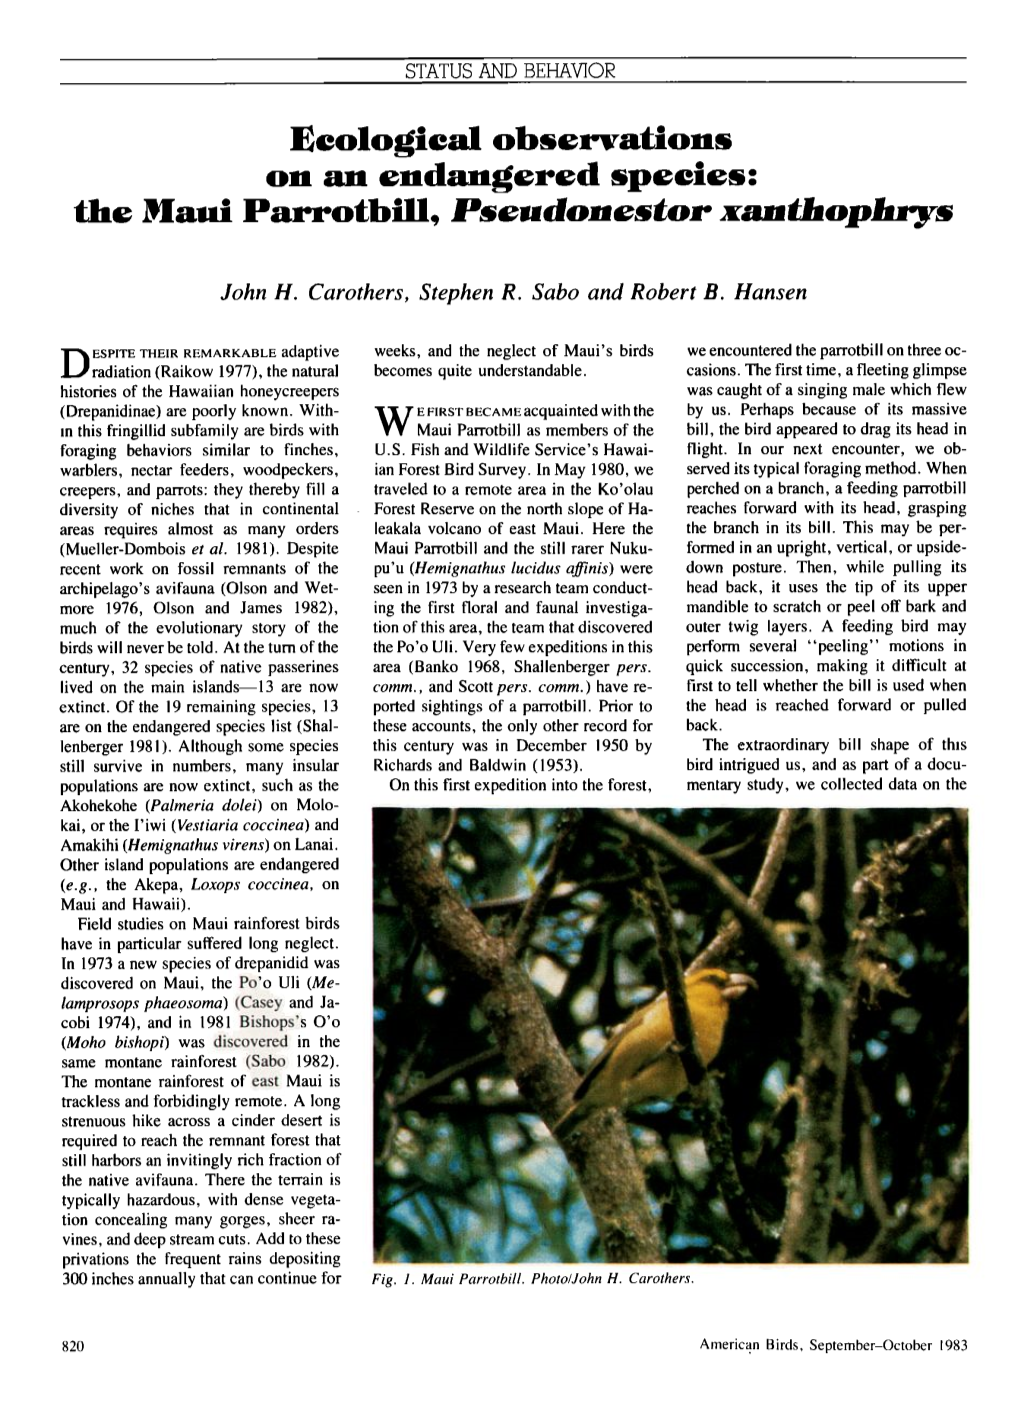 On an Endangered Species: the Maui Parrotbill, Pseudonestor Xanthophrs